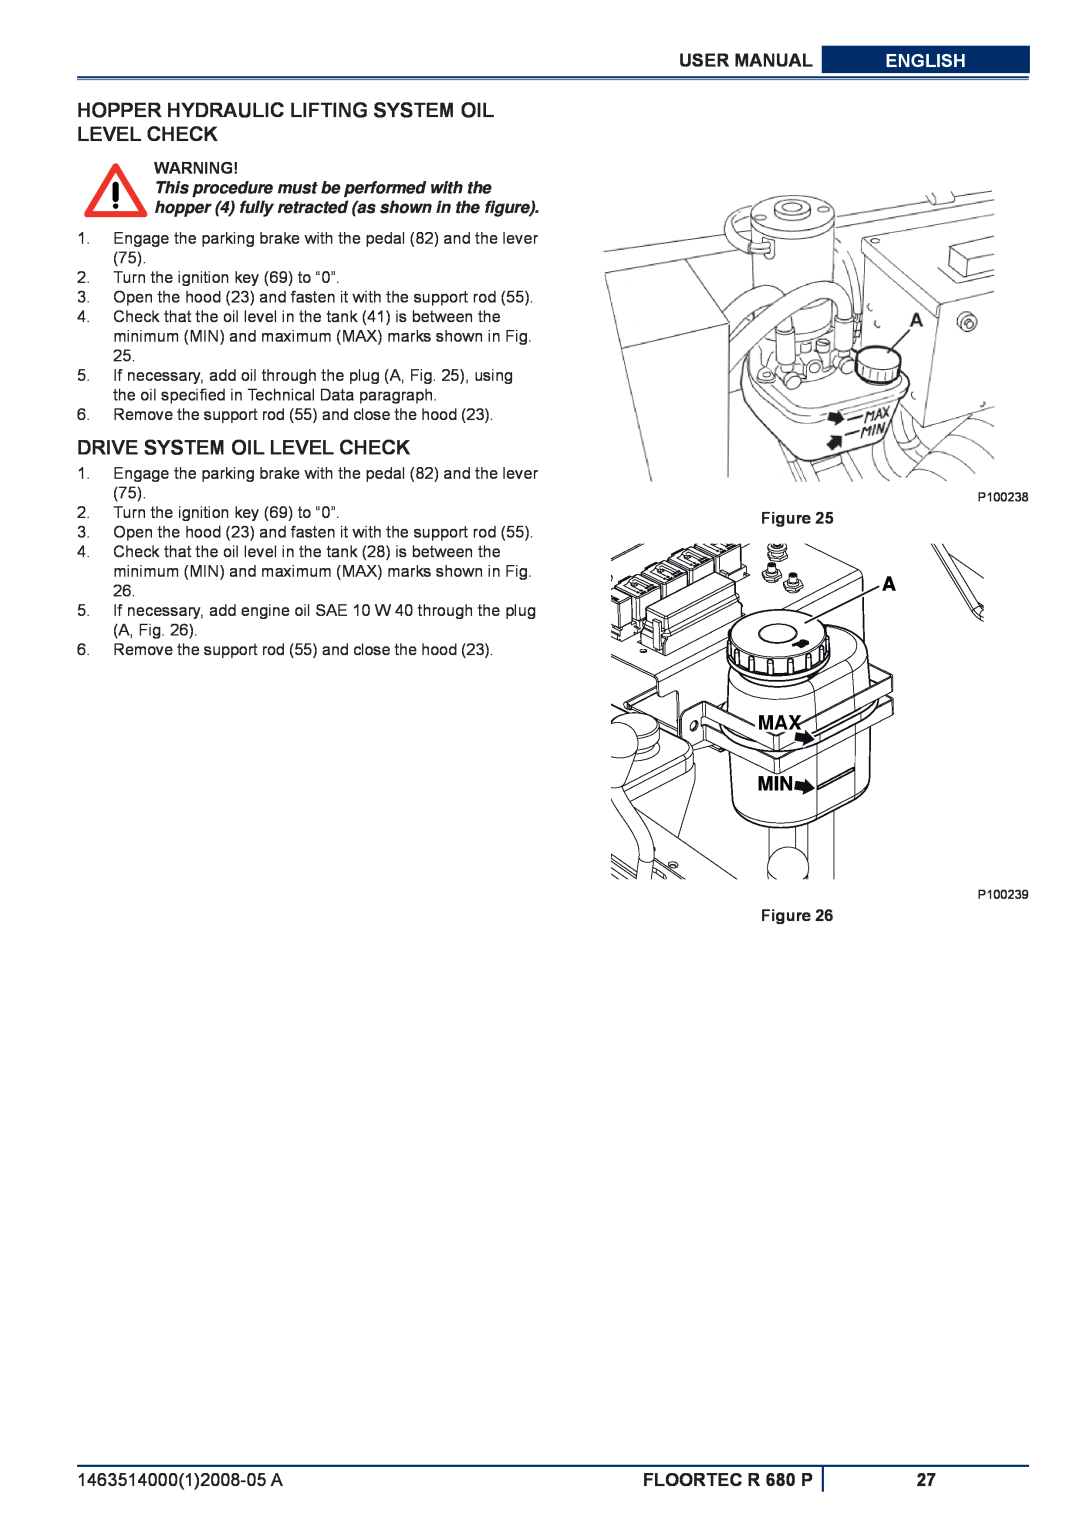 Nilfisk-ALTO R 680 P Hopper Hydraulic Lifting System Oil Level Check, Drive System Oil Level Check, A Max Min, User Manual 